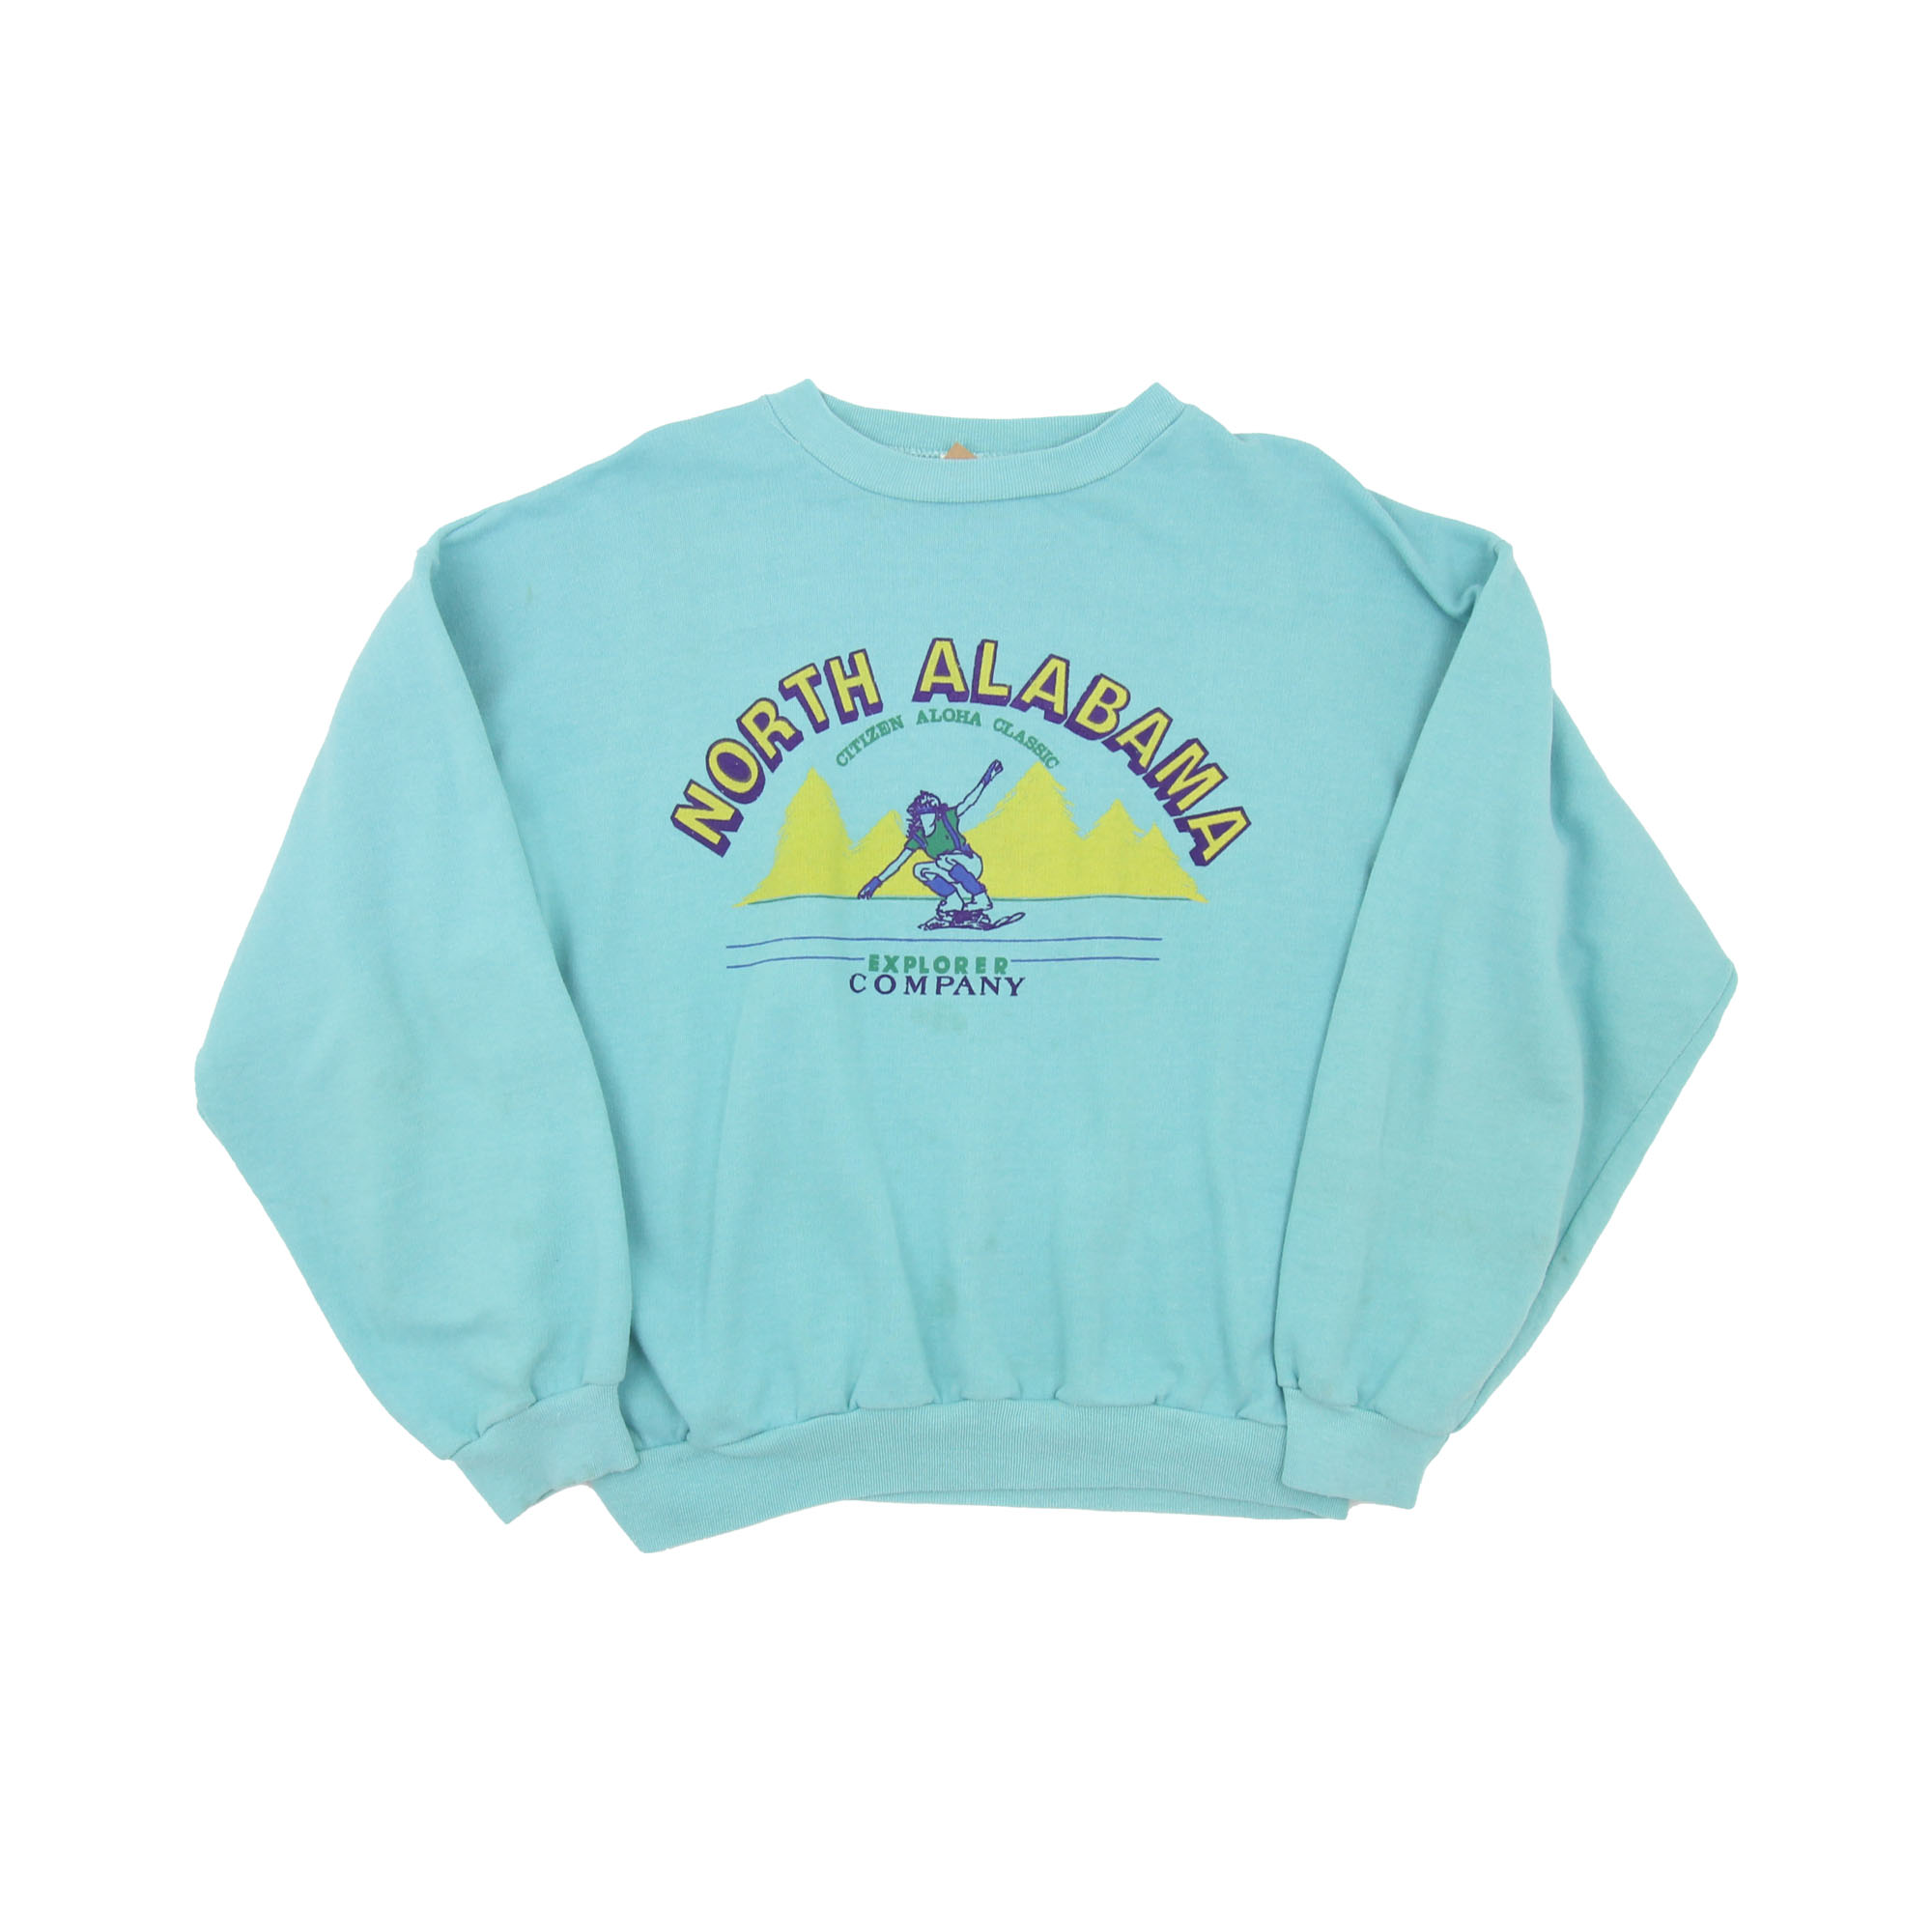 North Alabama Vintage Sweatshirt -  S